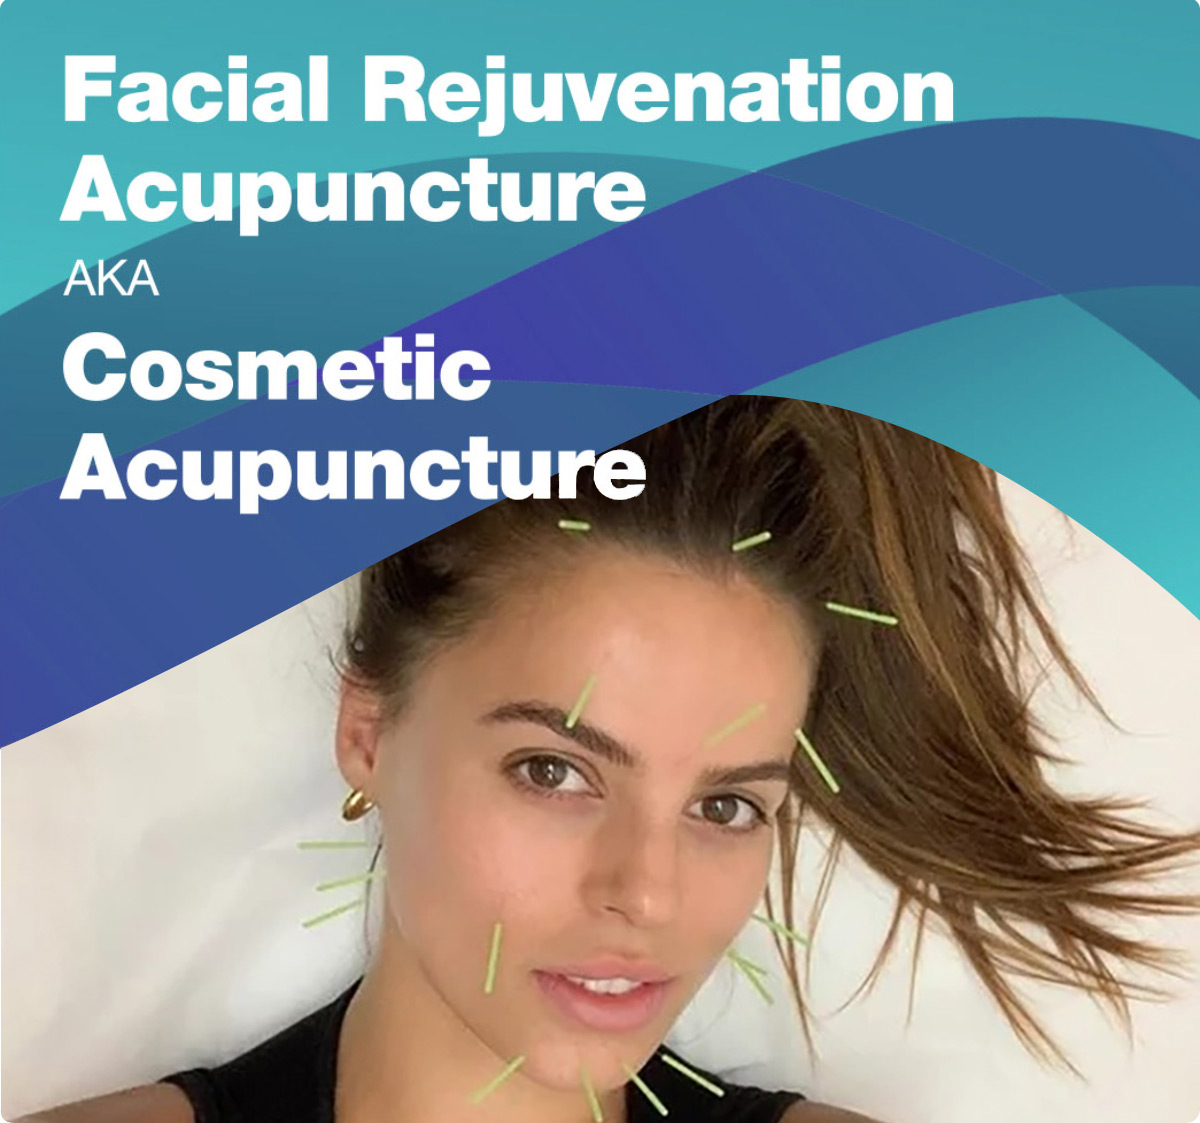 Facial Rejuvenation Acupuncture, a.k.a. Cosmetic Acupuncture